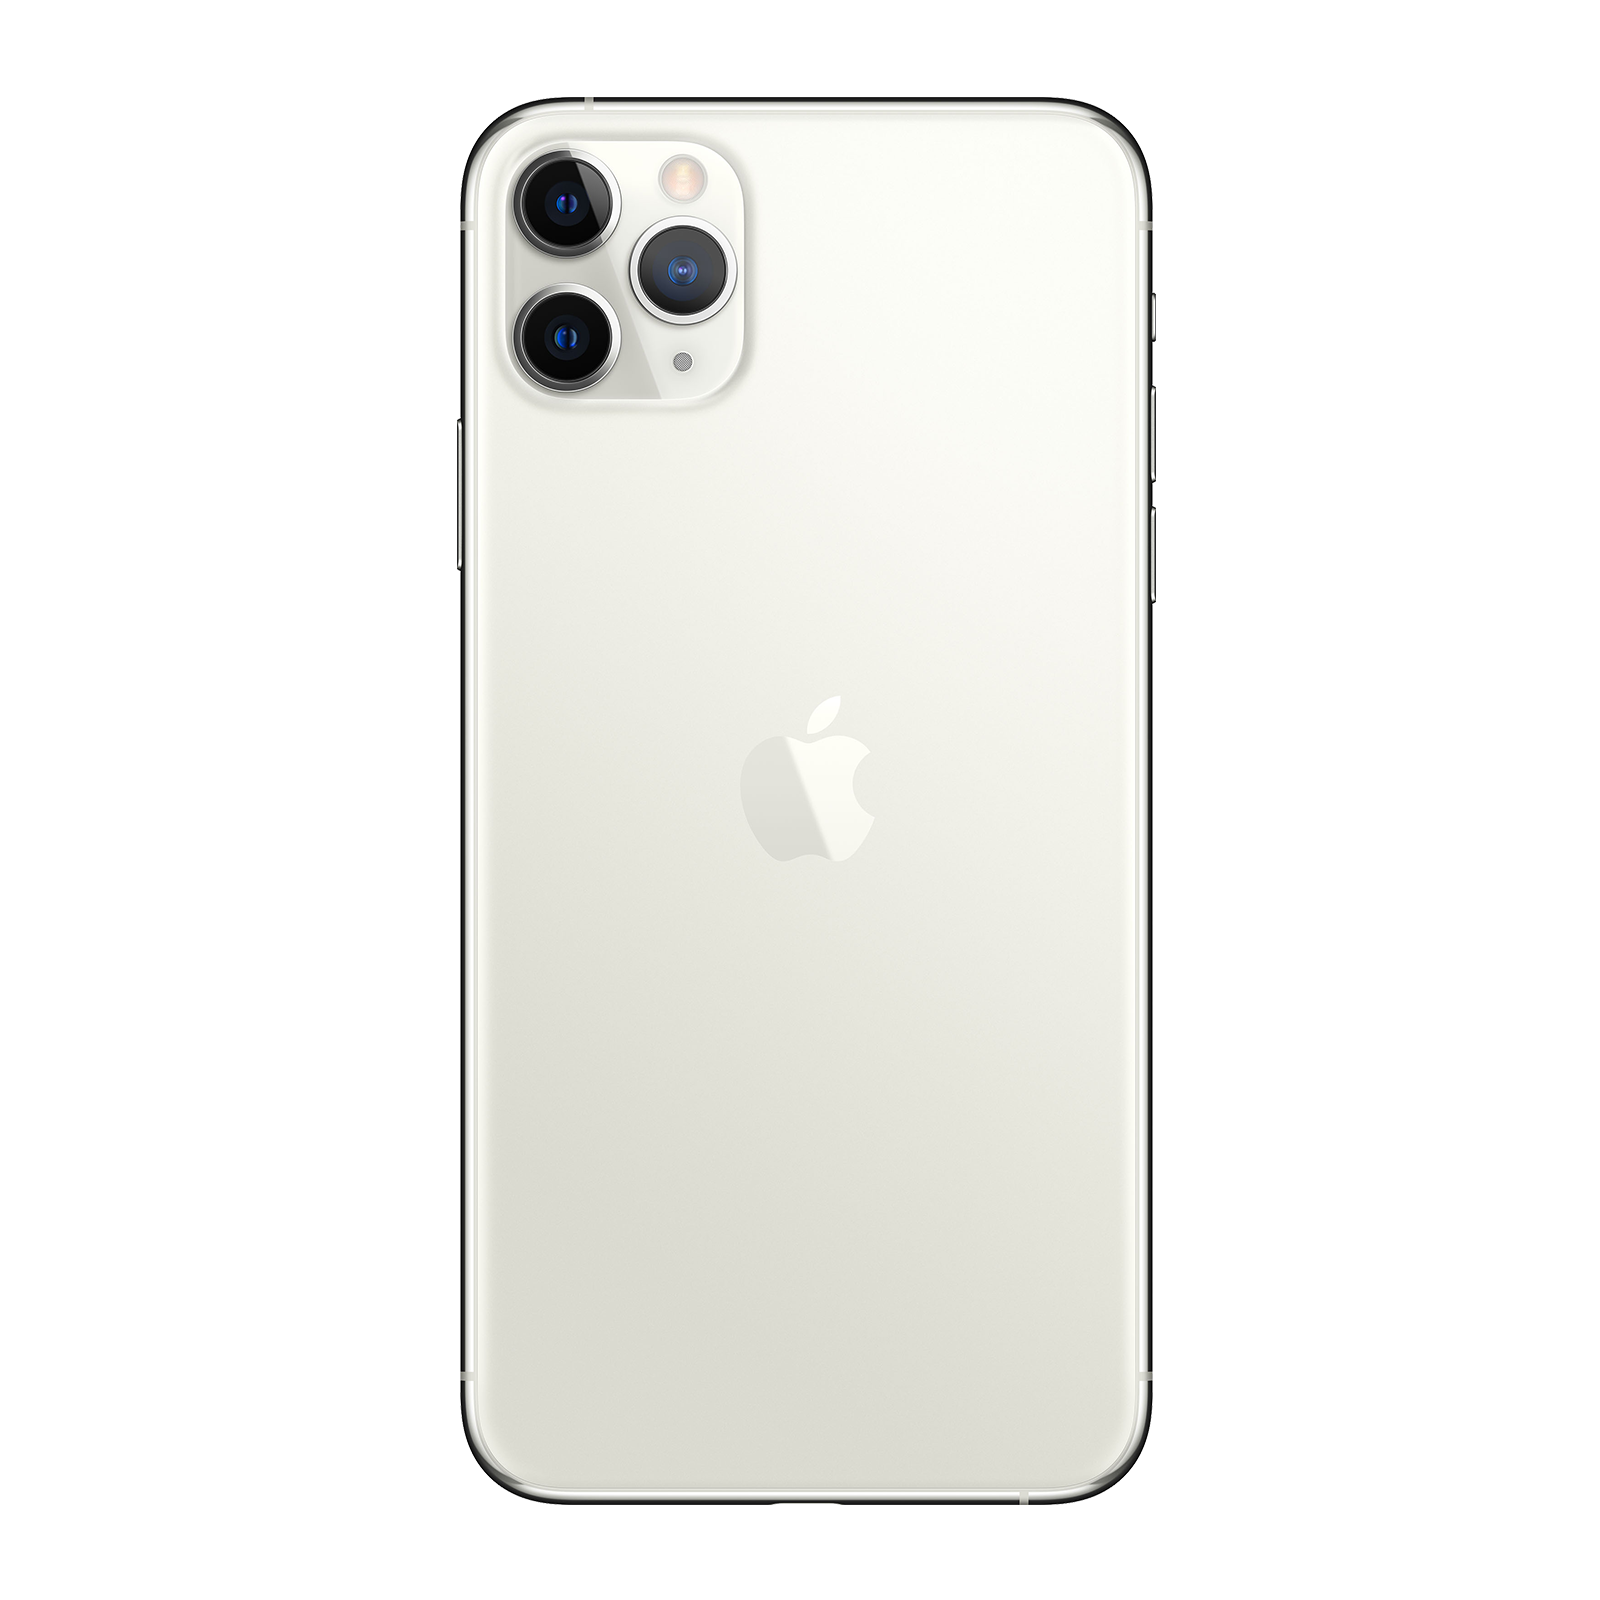 iPhone 11 Pro 256GB Silver Pristine - Unlocked